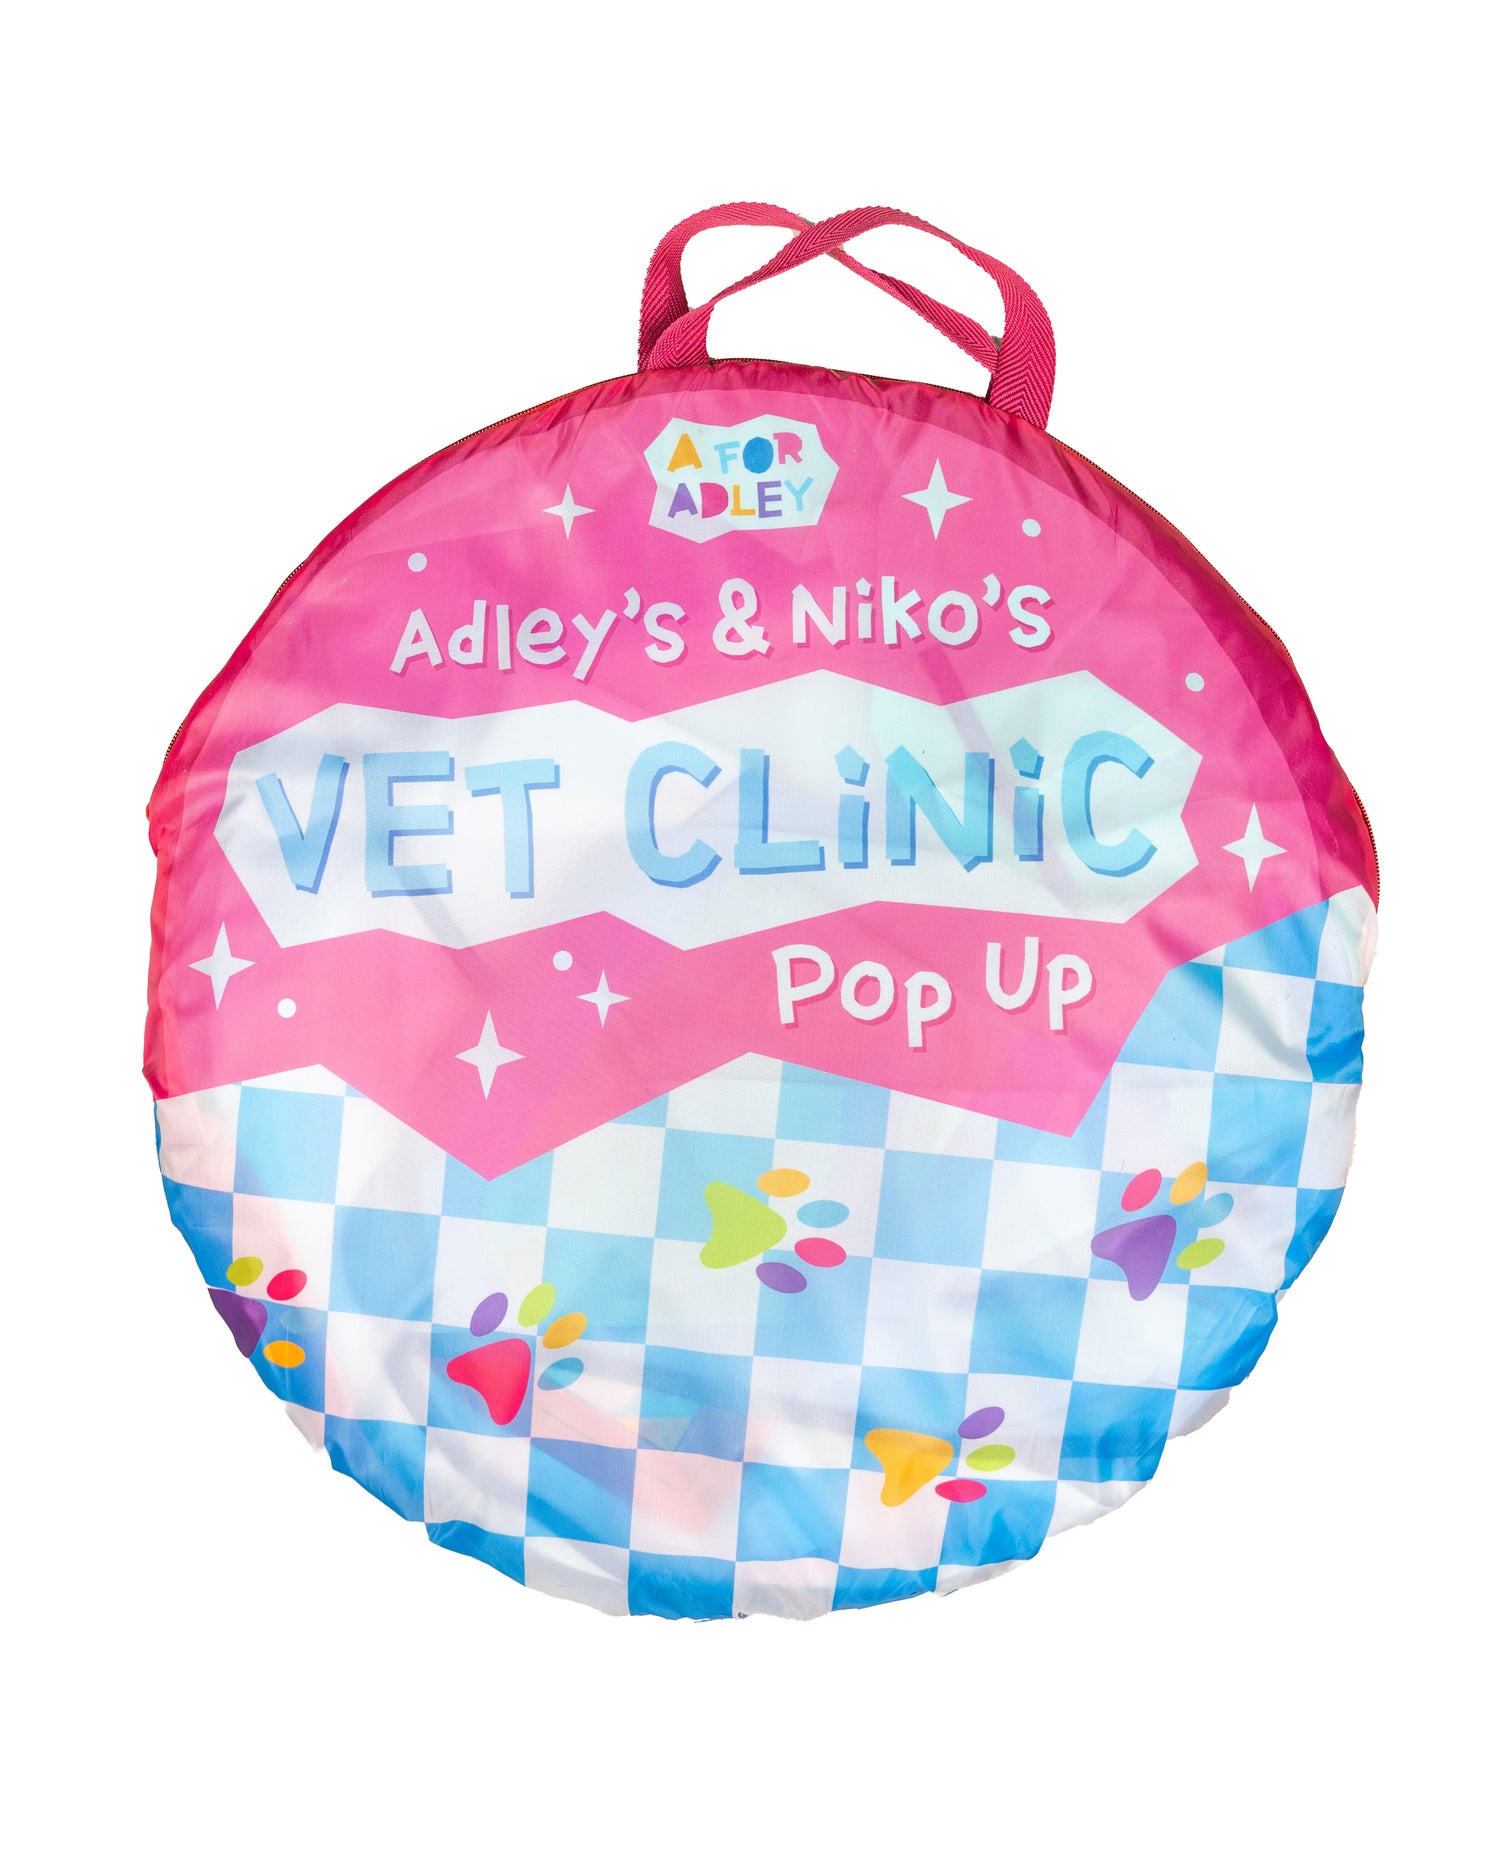 Adley & Niko's Vet Clinic Pop Up